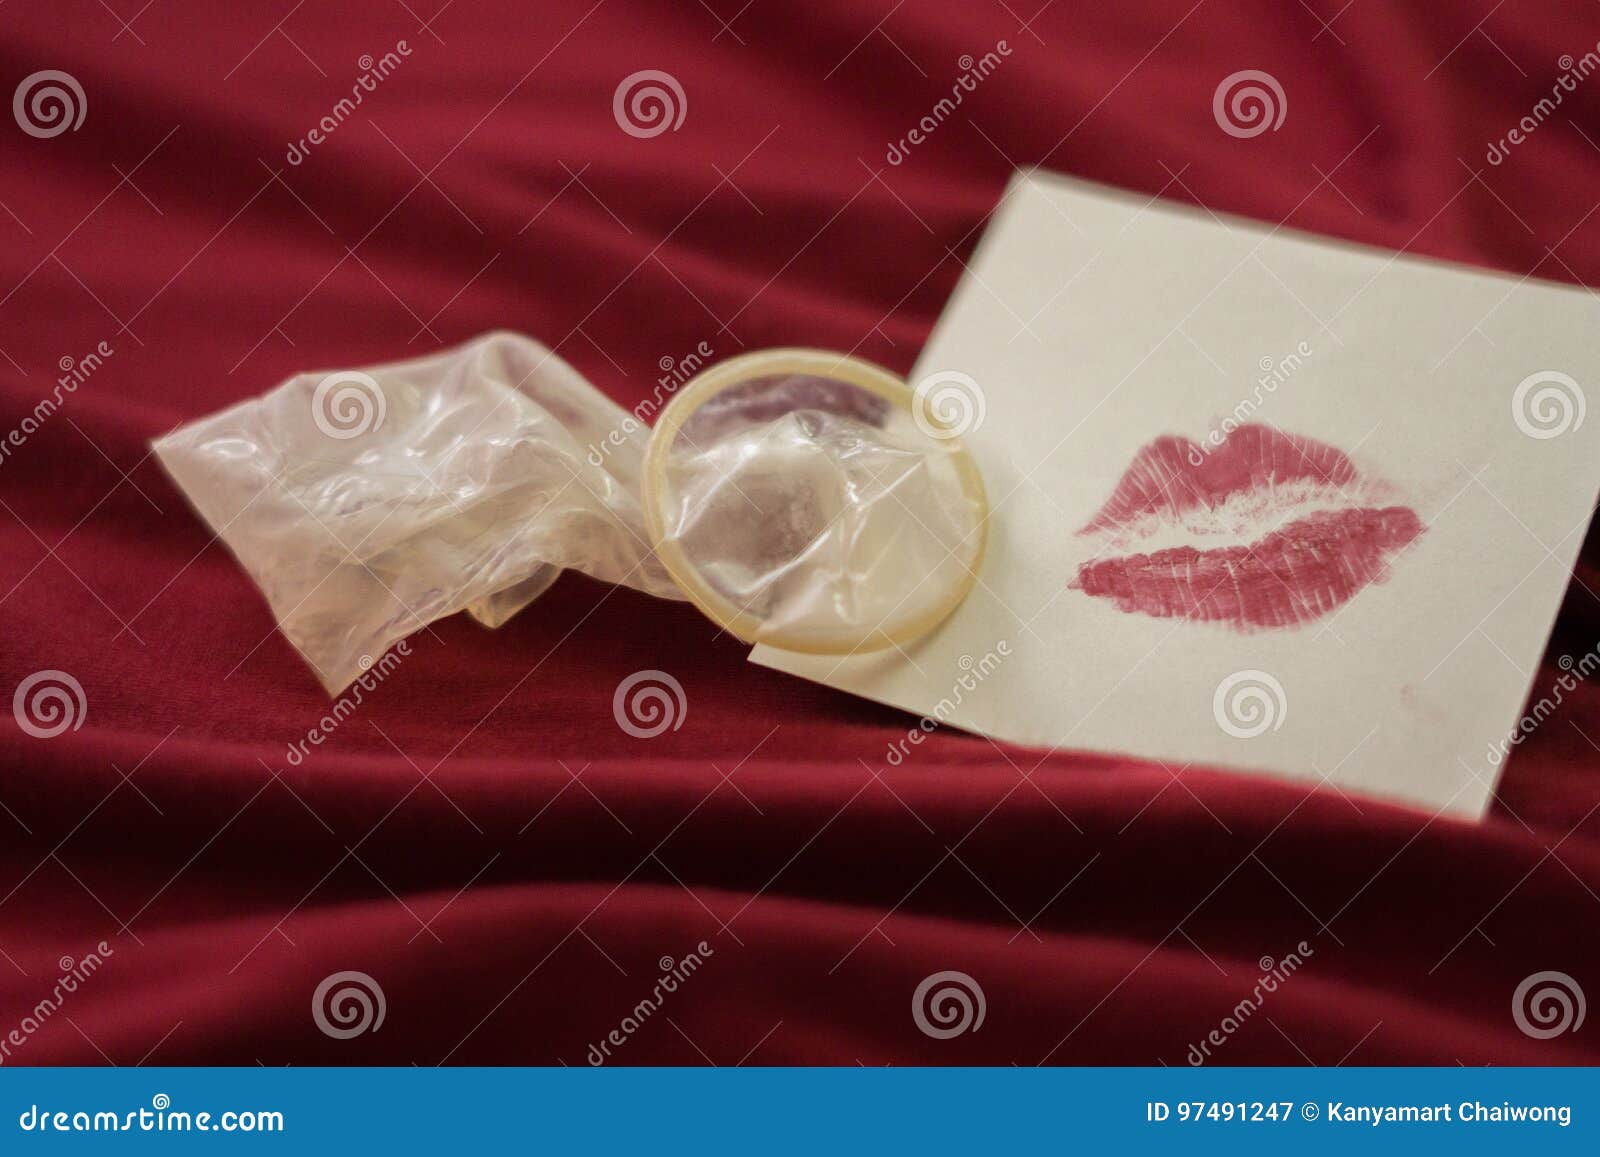 в презервативе была сперма любовника фото 98